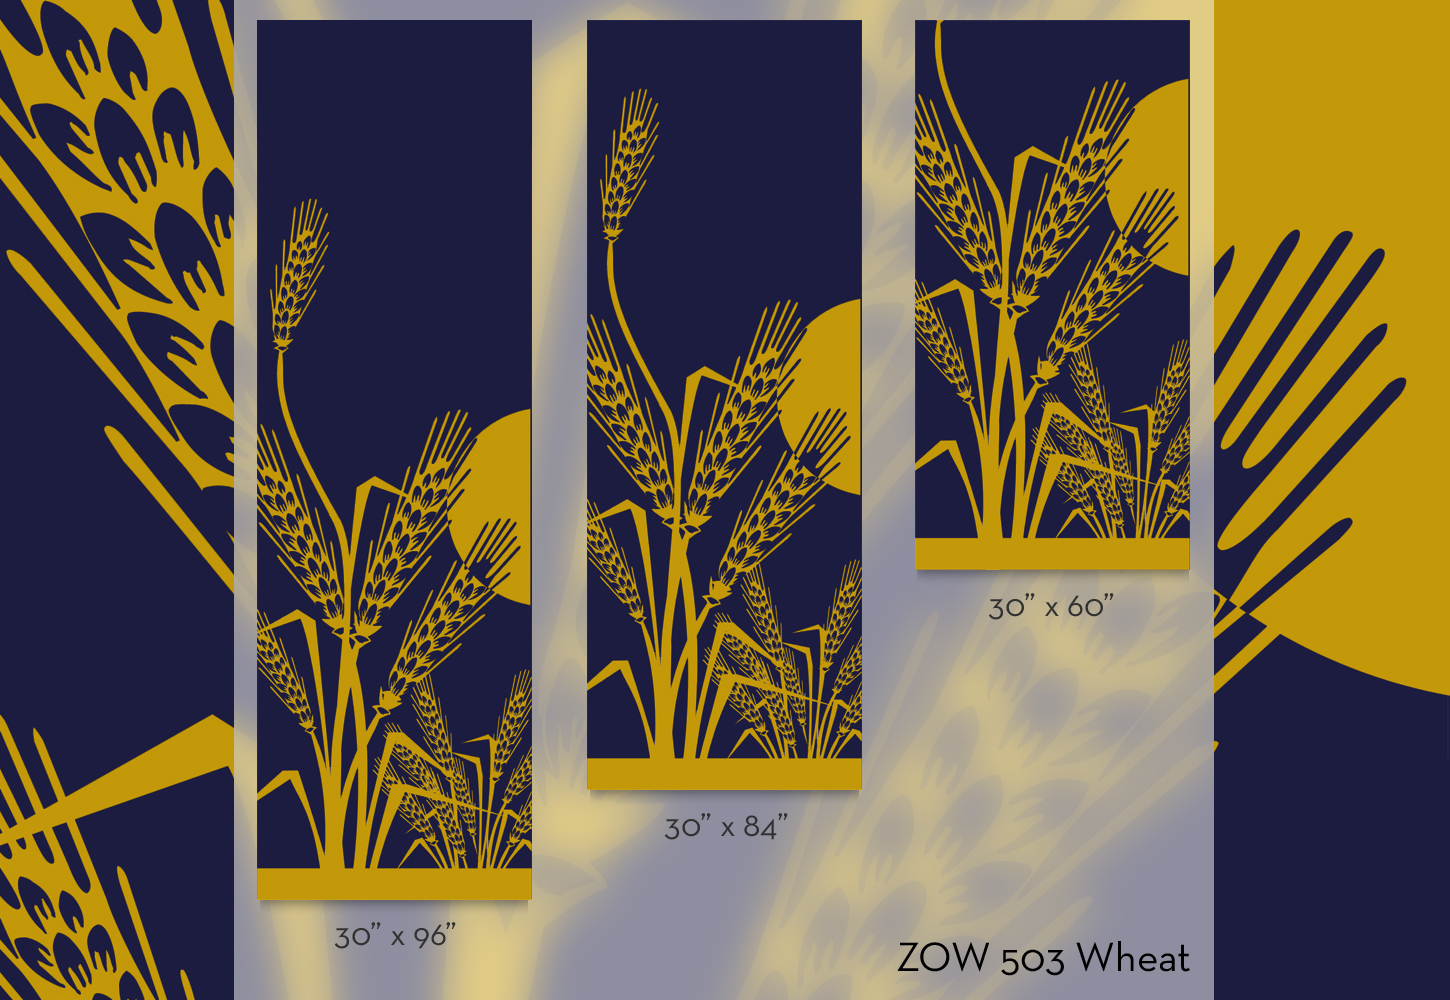 ZOW 503 Wheat